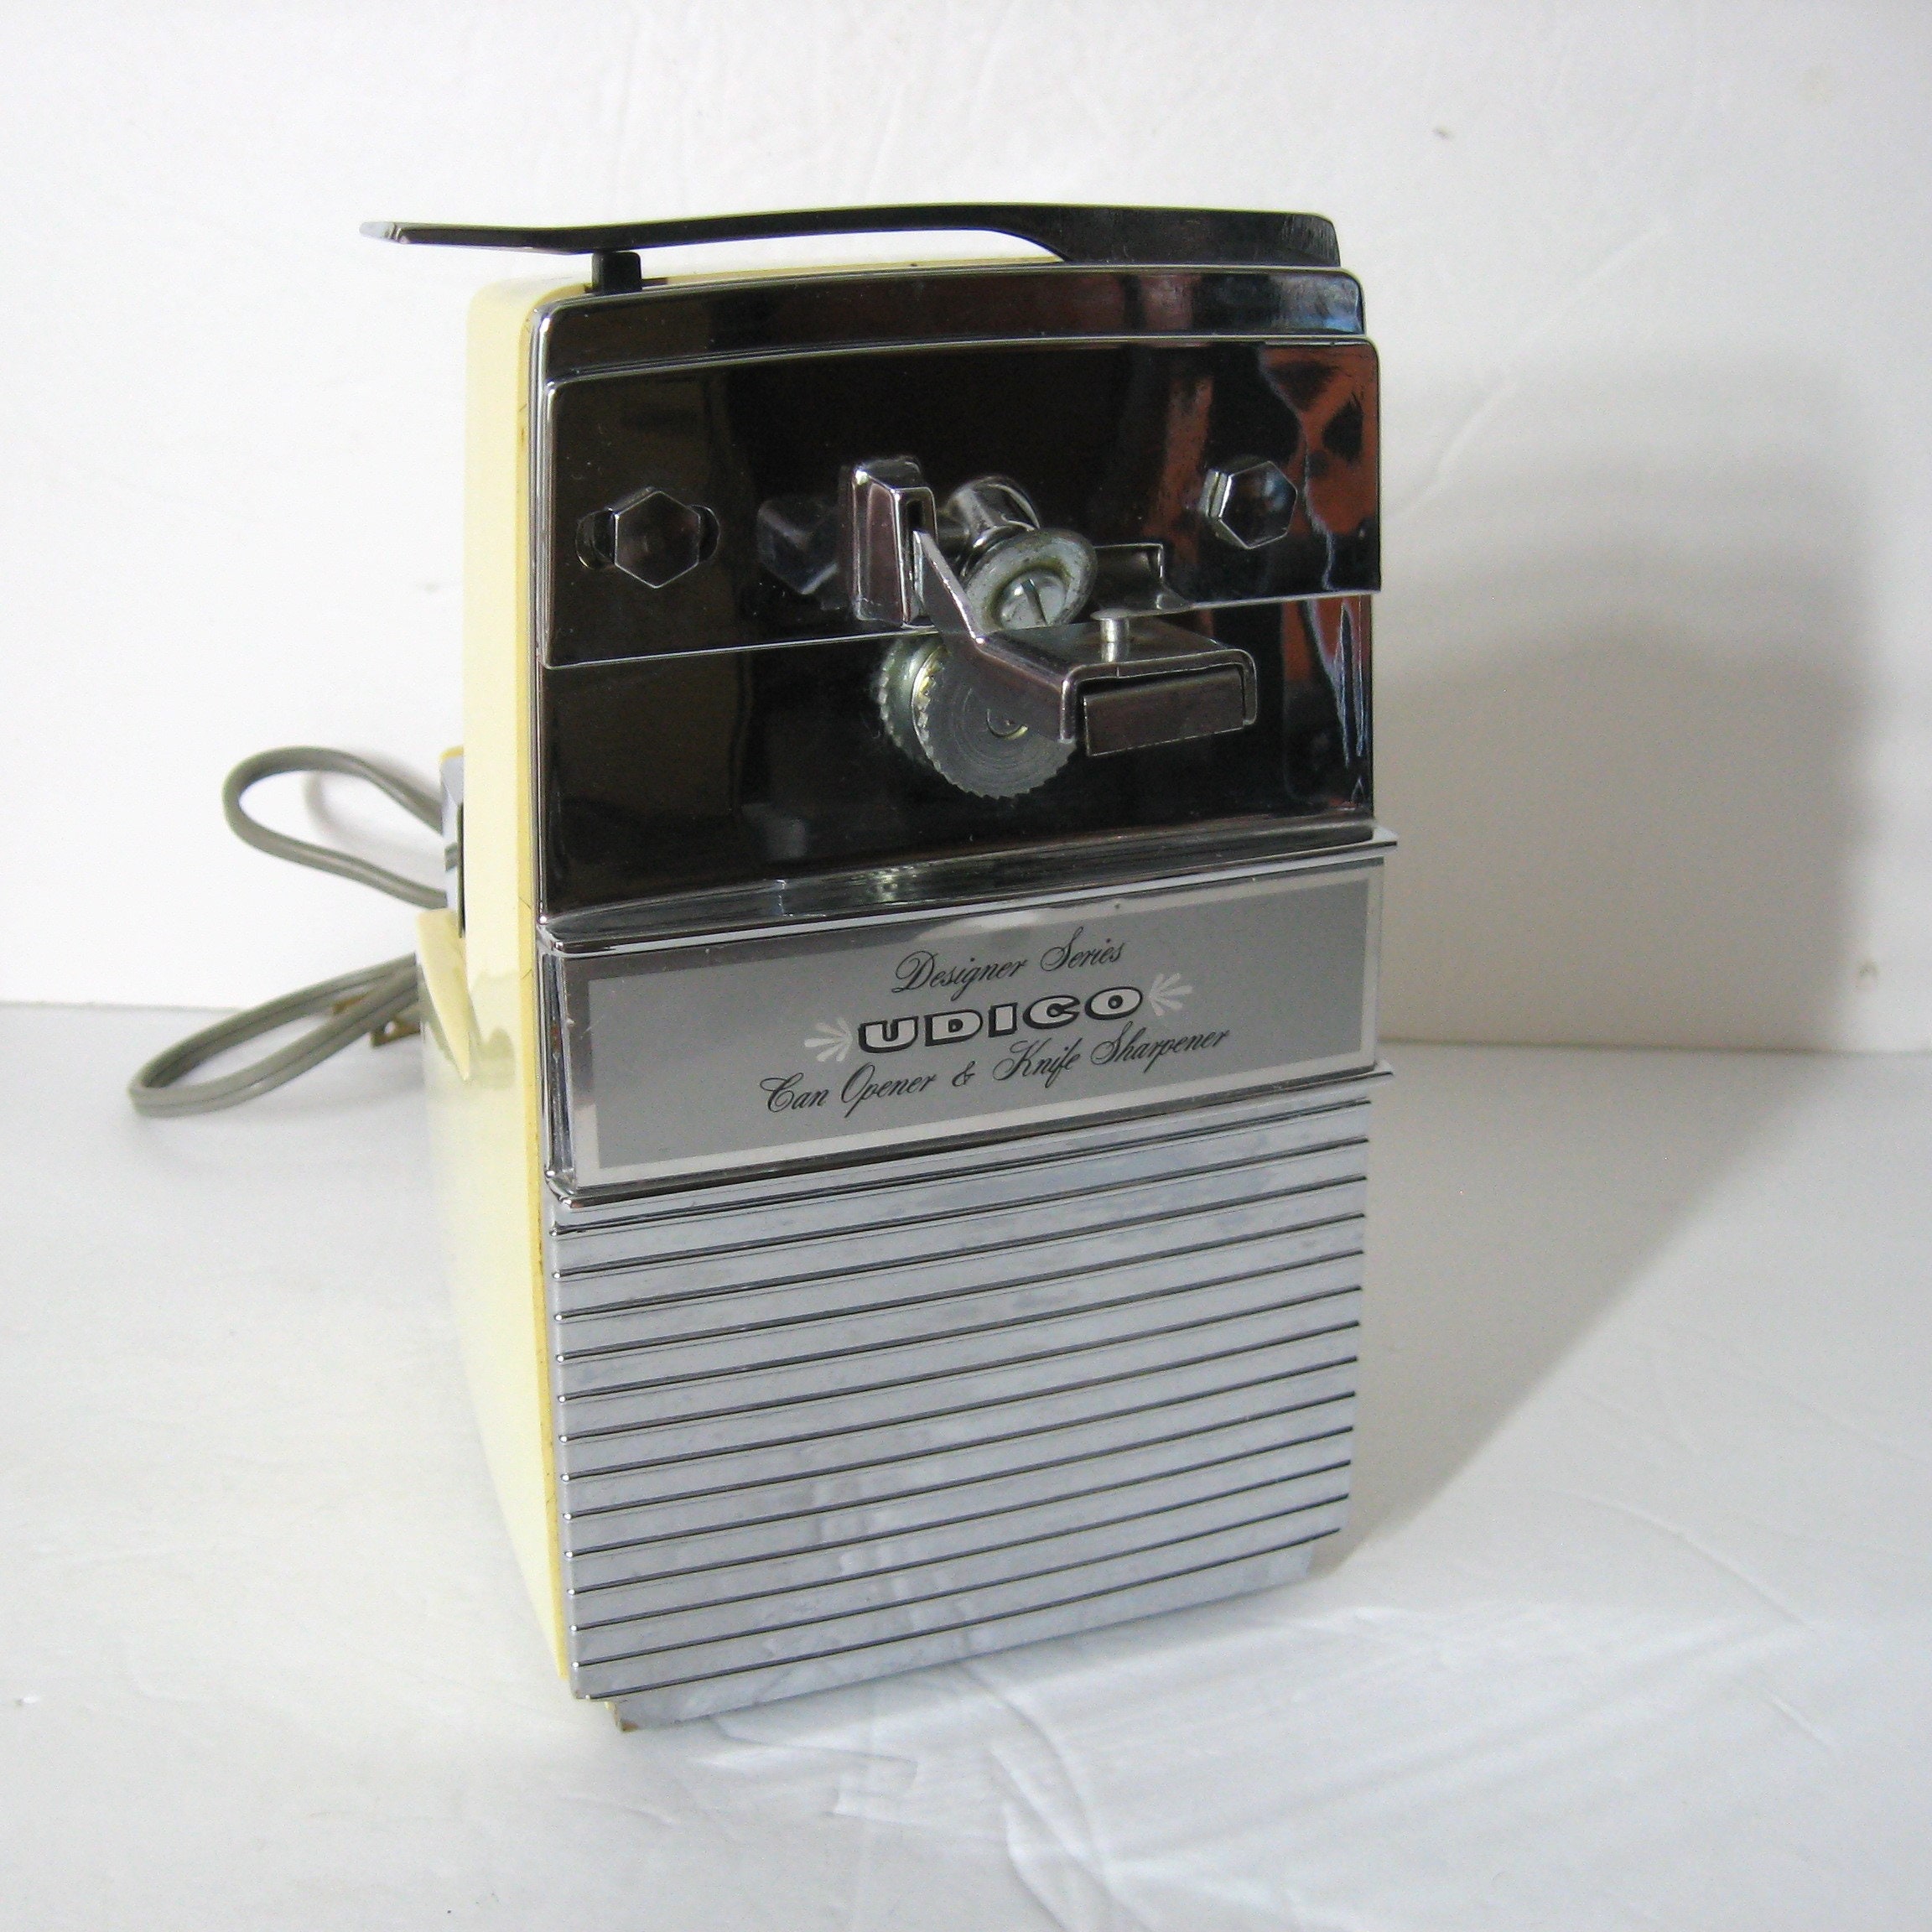 Vintage Wearever Handheld canhandler Electric Can Opener Working 